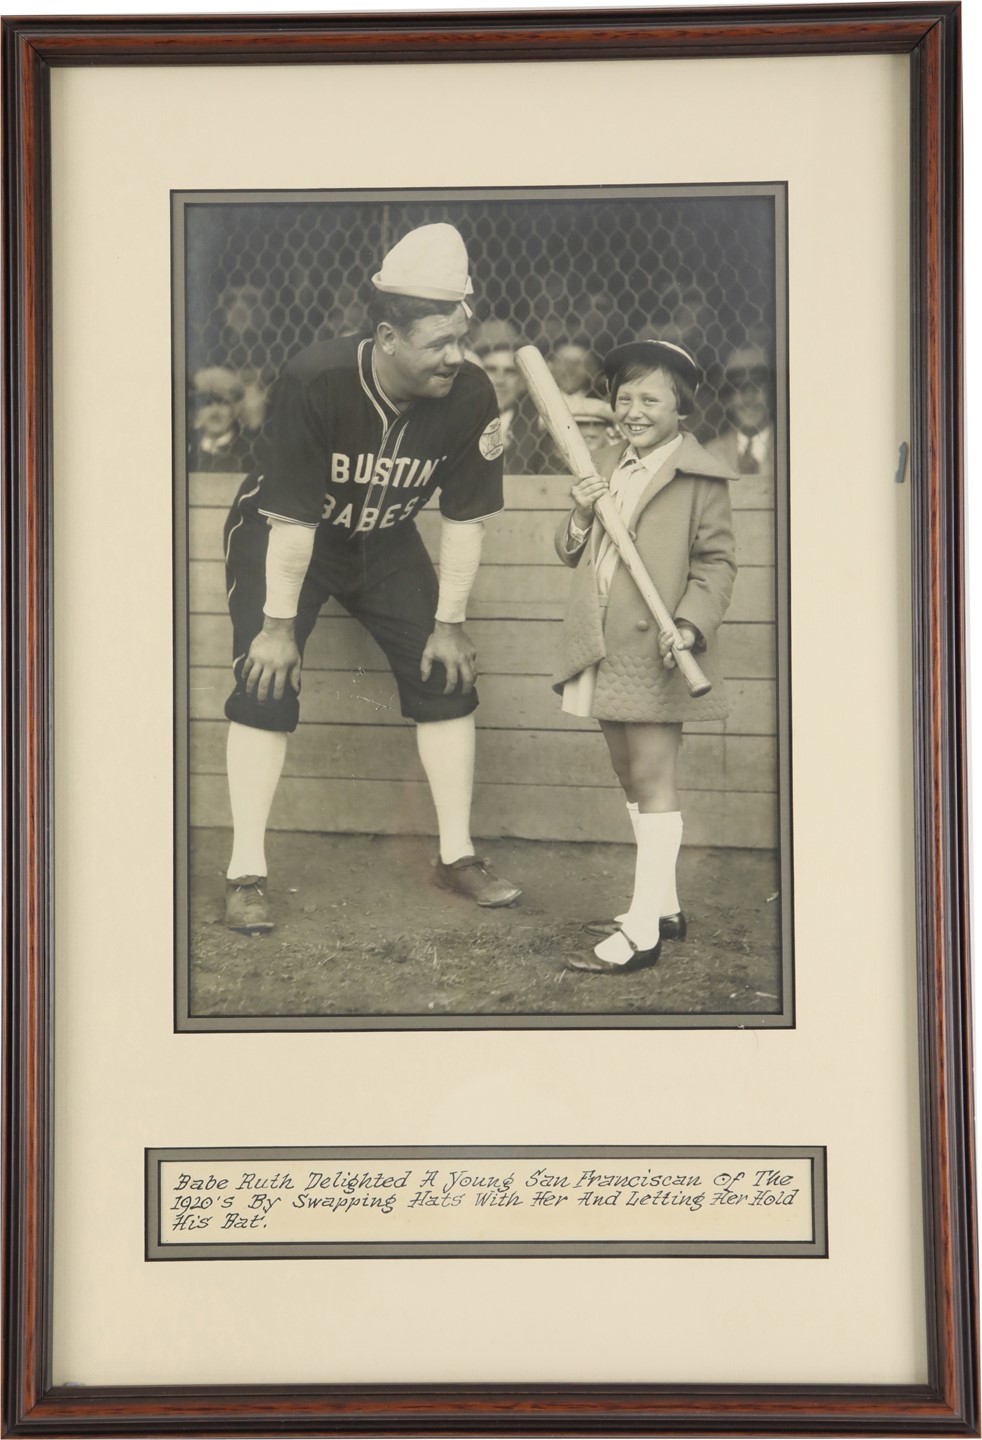 Vintage Sports Photographs - Circa 1928 Babe Ruth "Bustin' Babes" Oversize Original Vintage Photograph